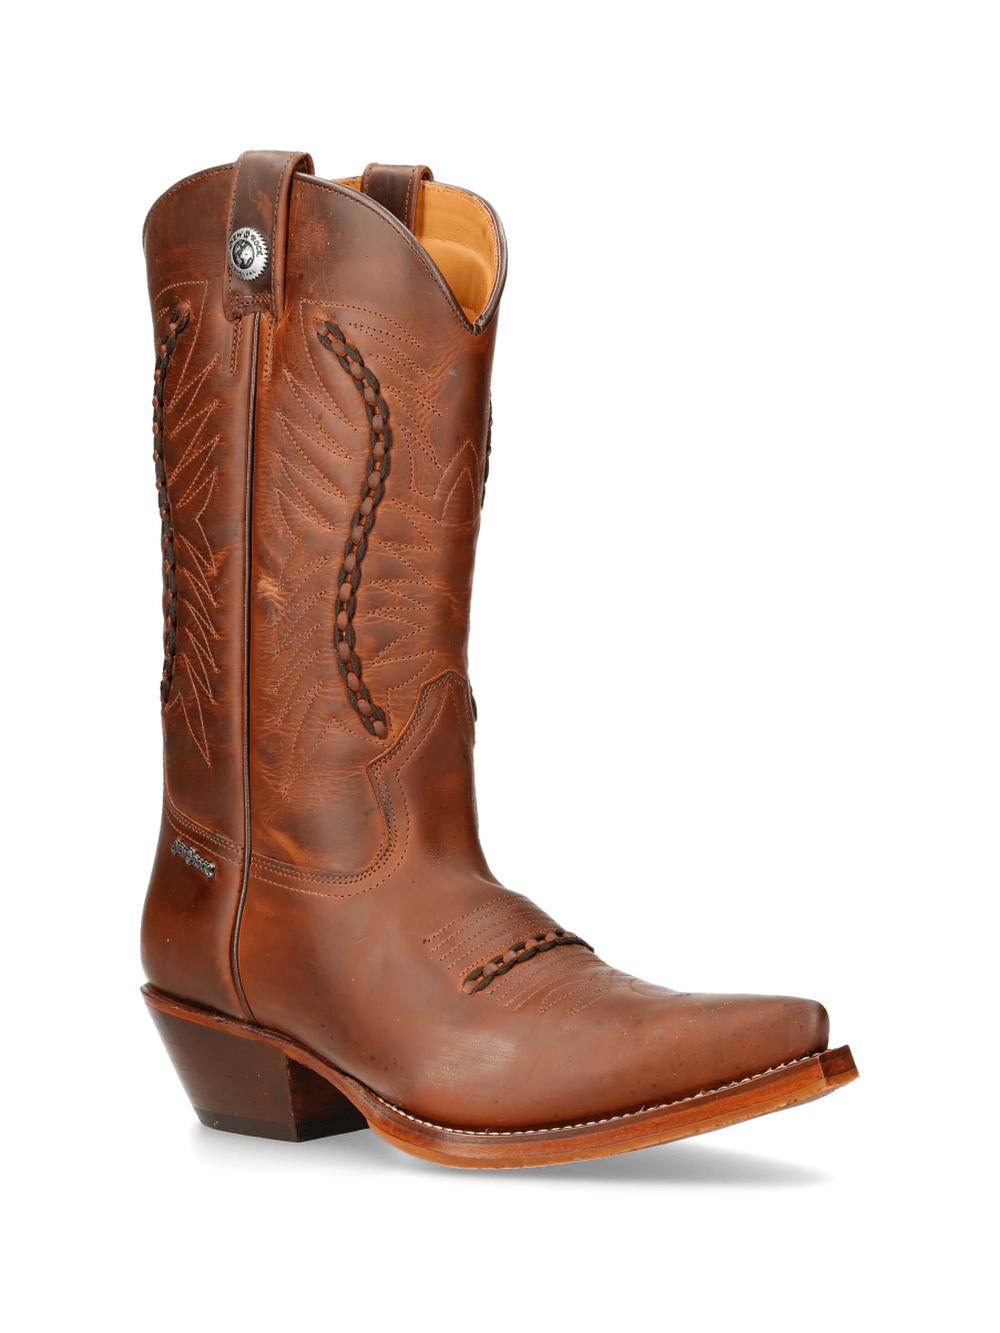 NEW ROCK Men's Western Zip-Up Brown Leather Boots